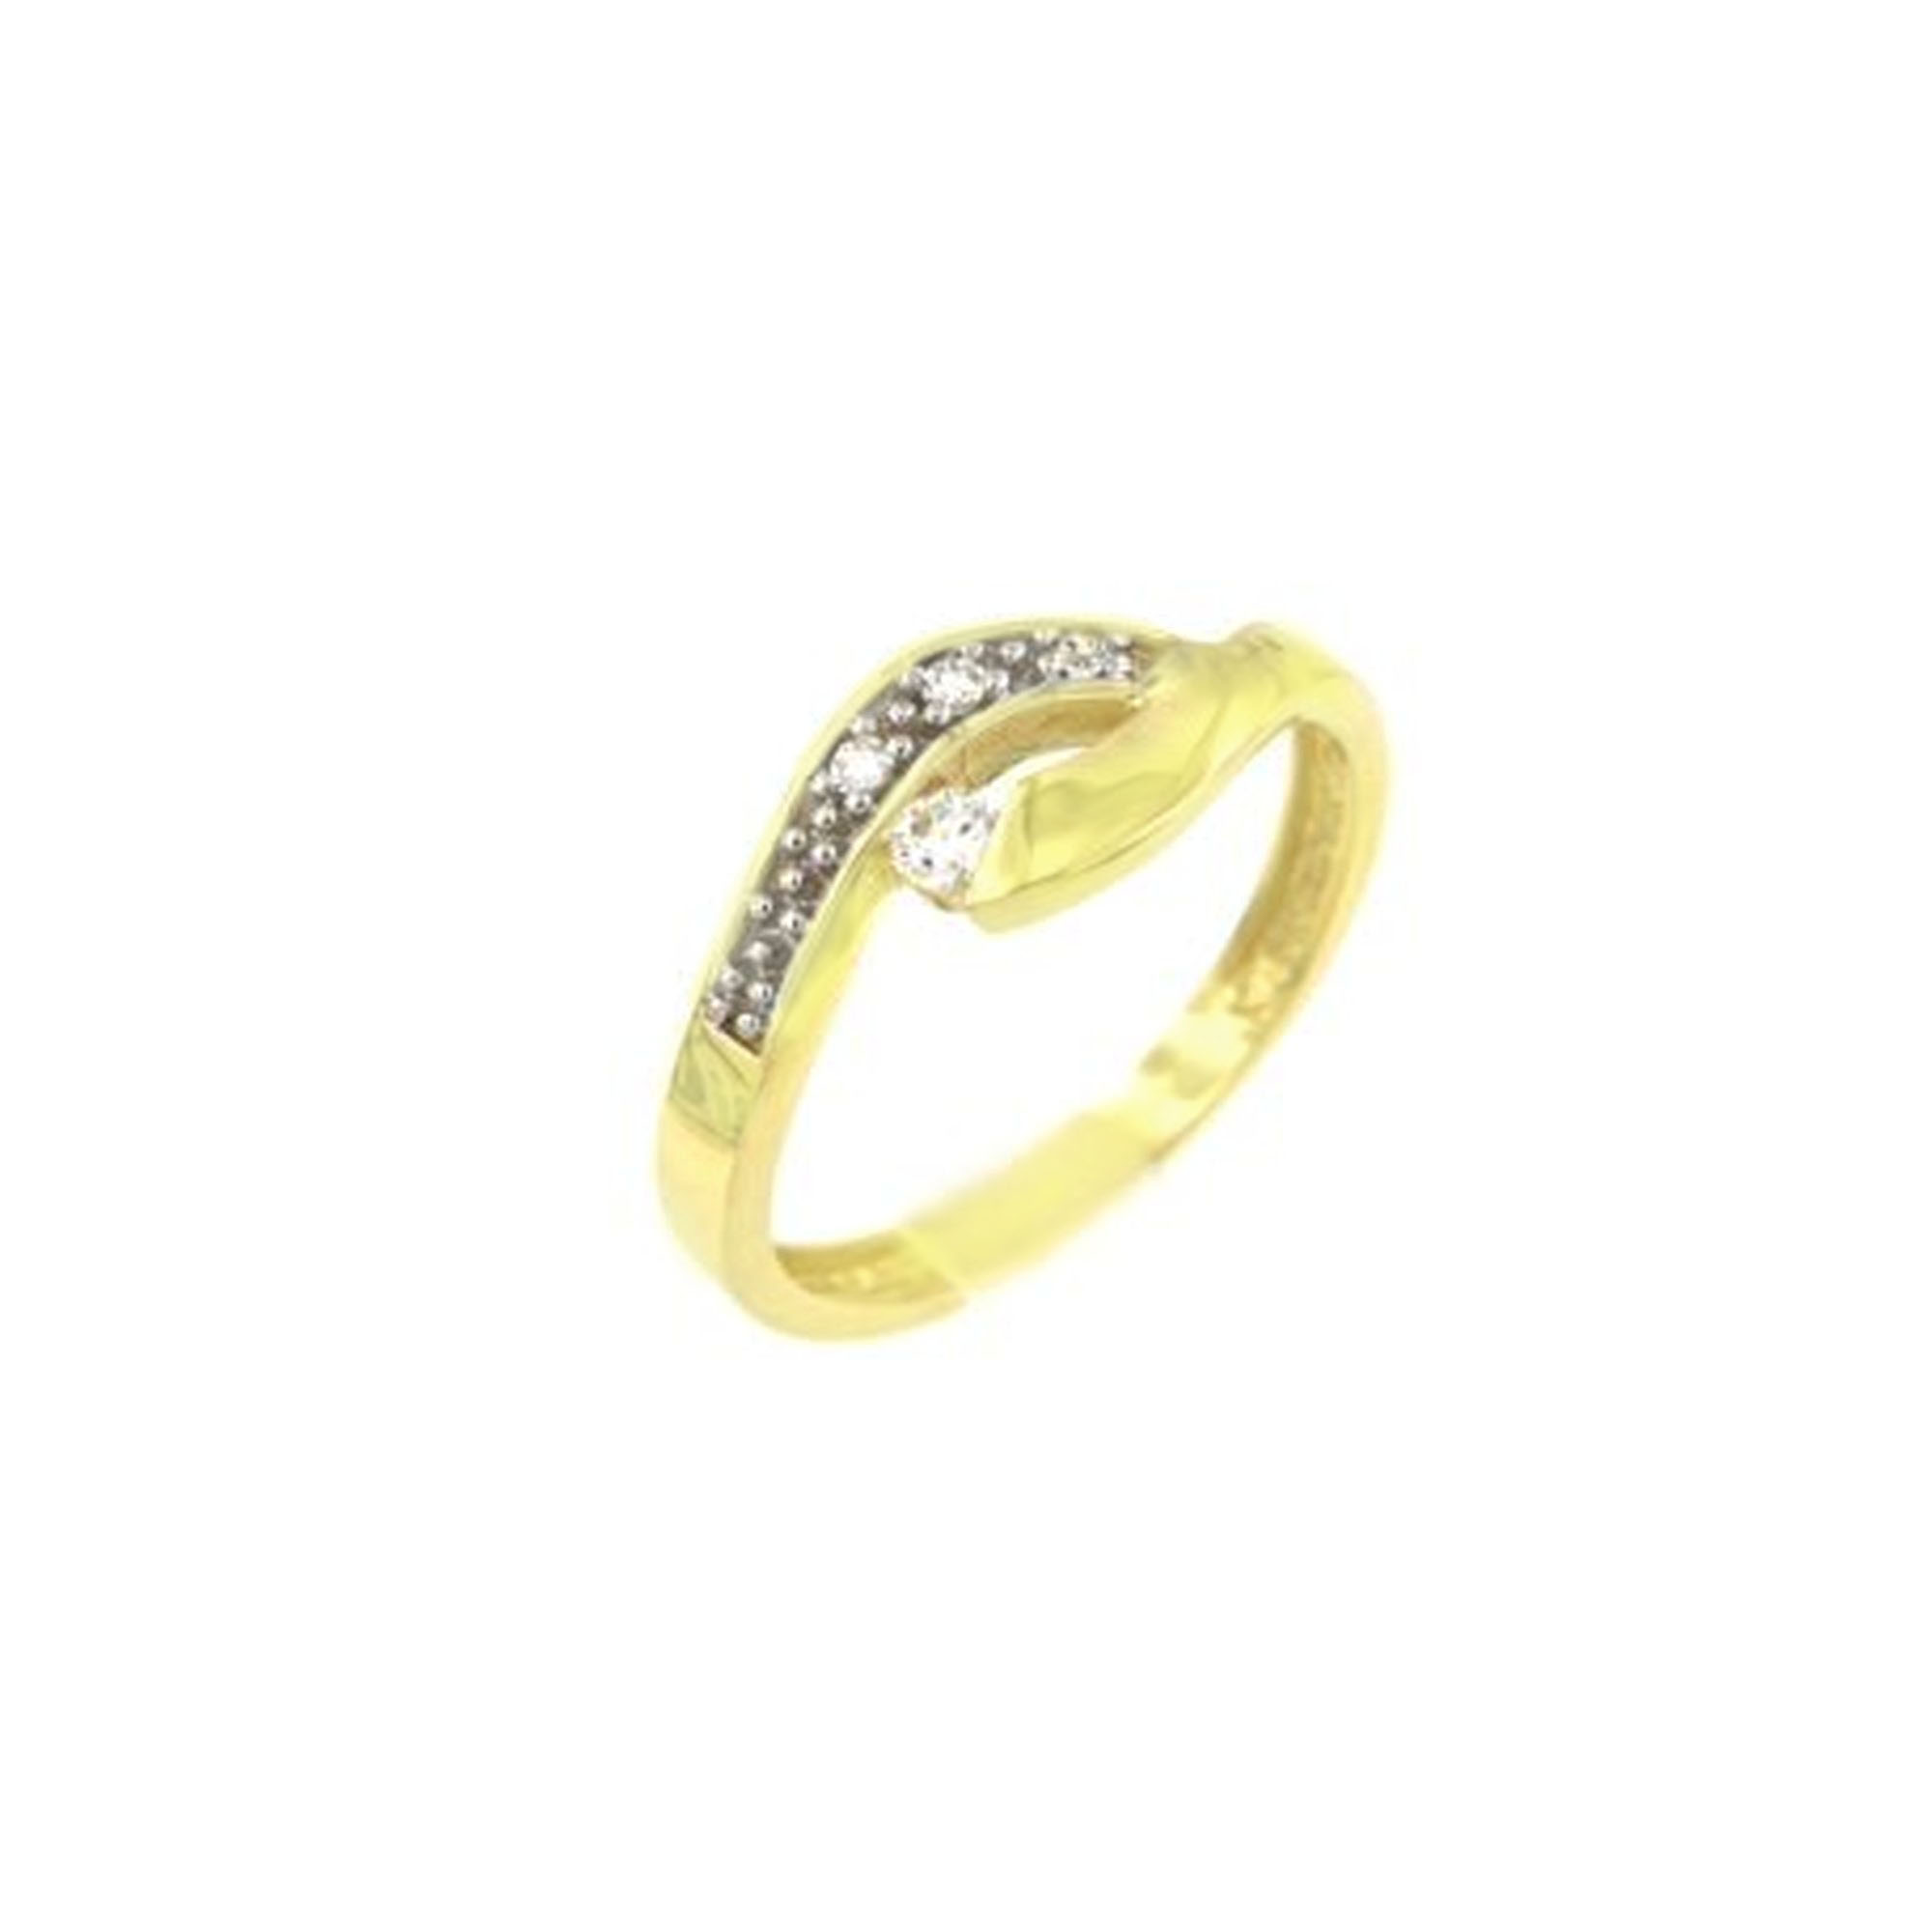 MOISS Moiss prsten ze žlutého zlata MELANIE RA000218 Velikost 62 mm RA000219 + doprava ZDARMA